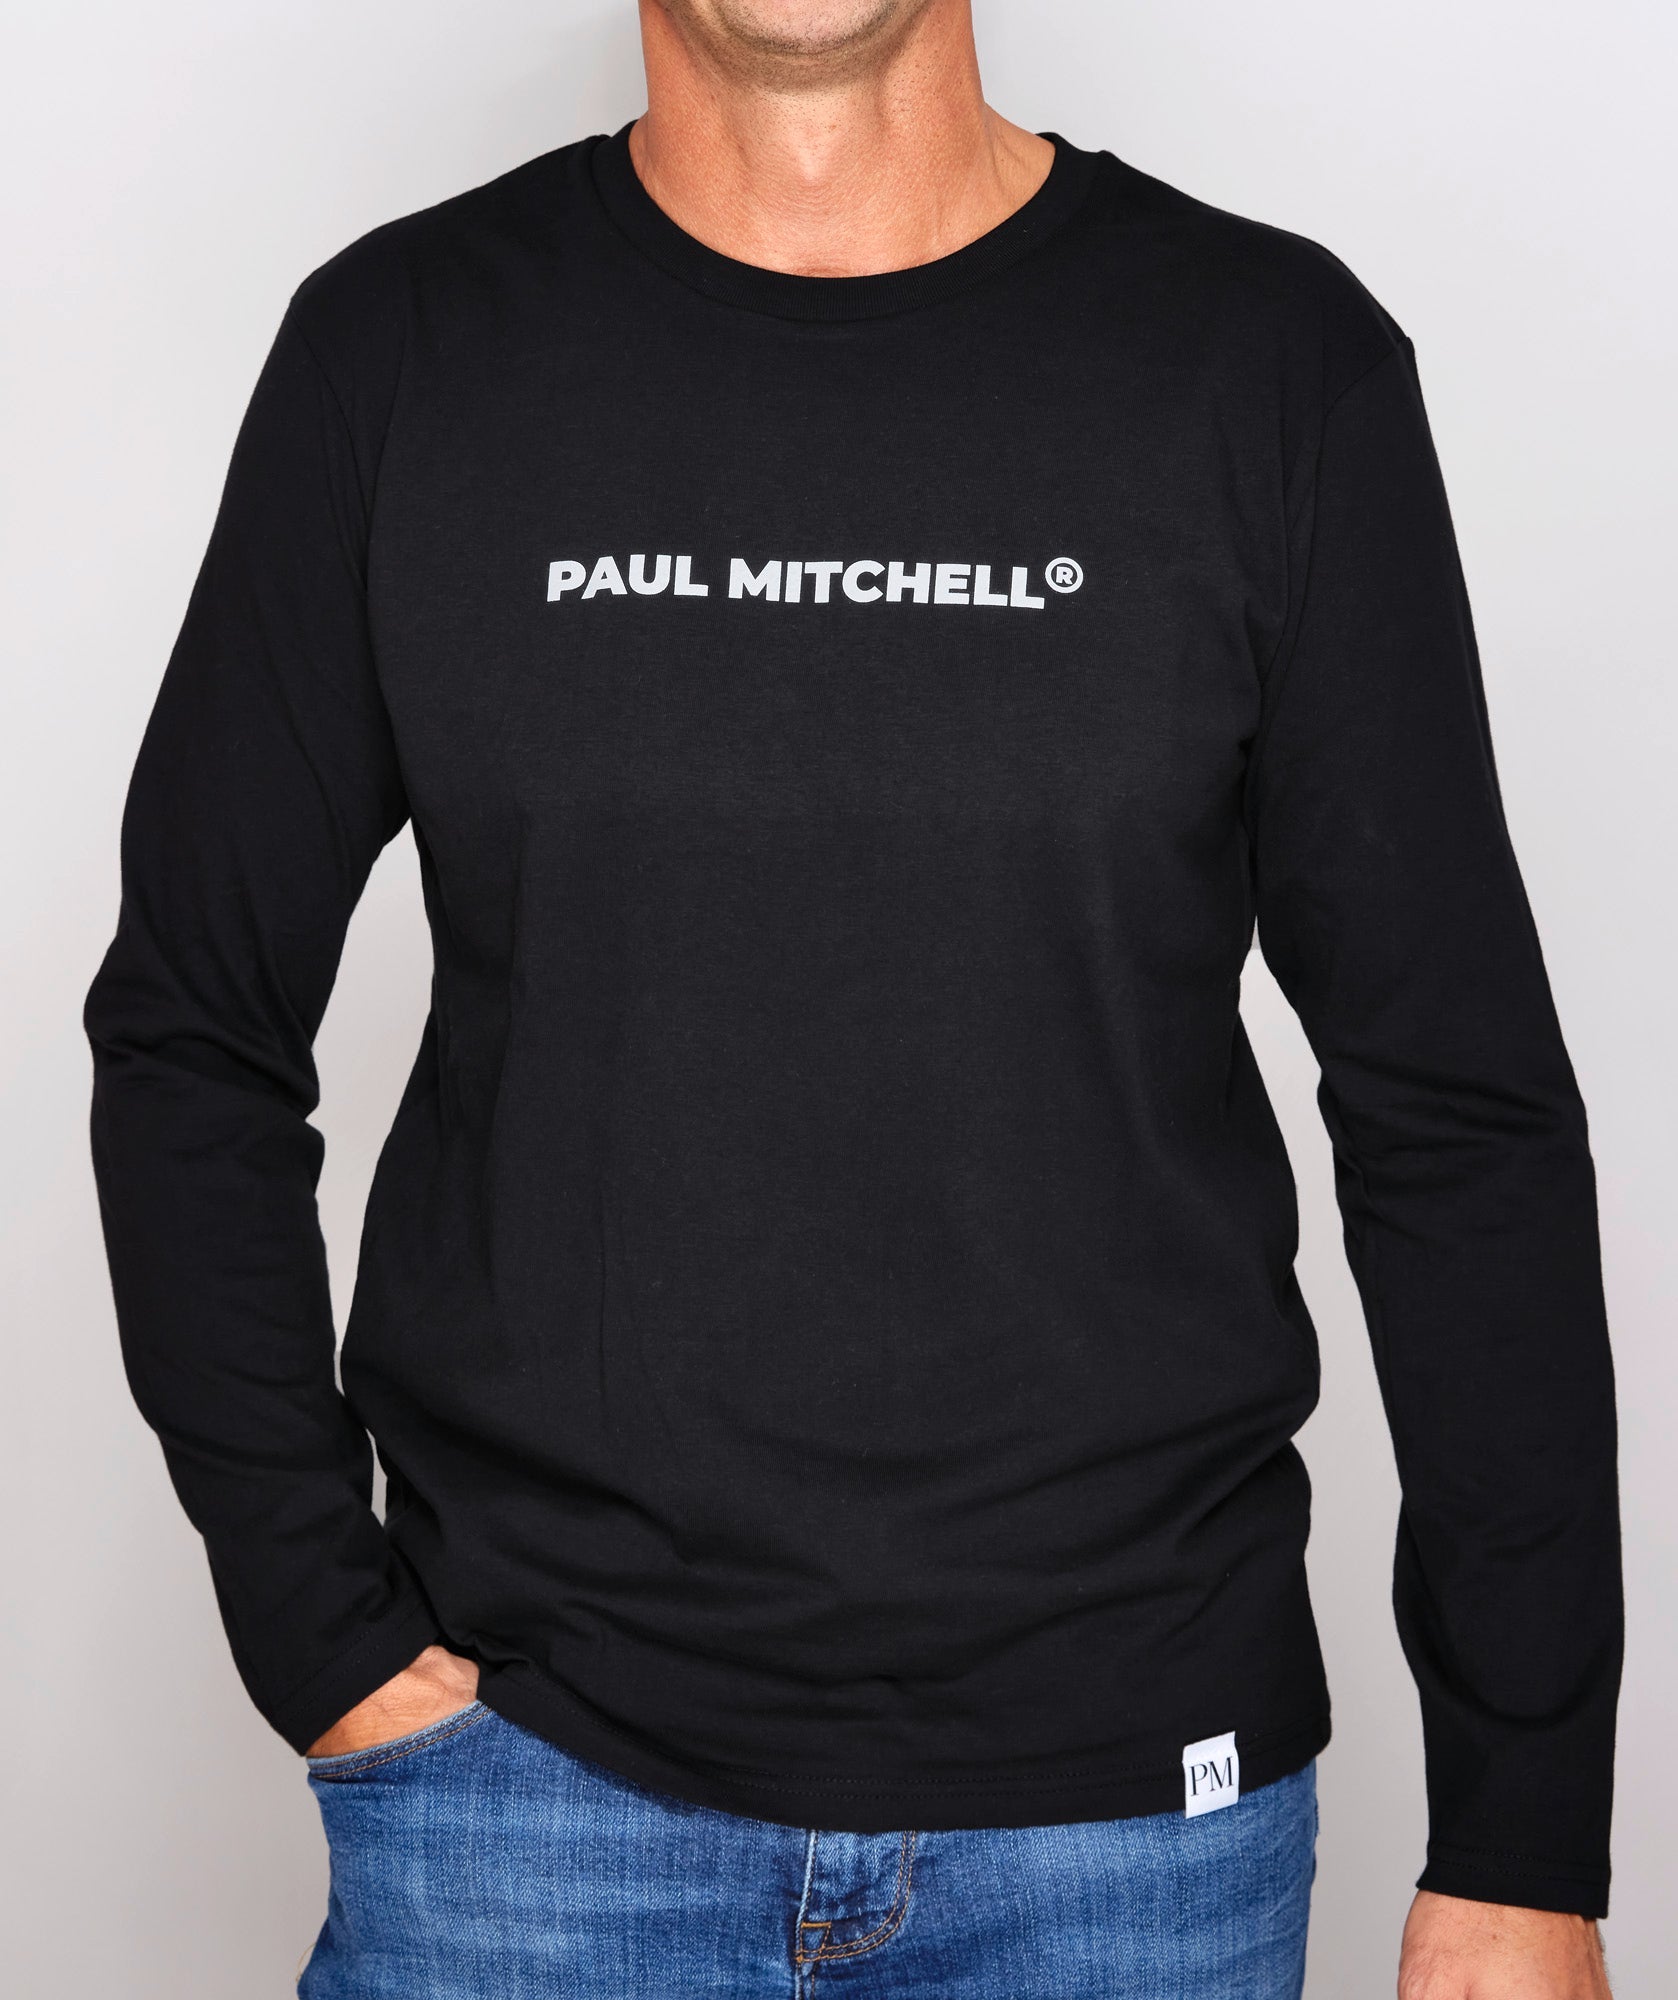 PAUL MITCHELL® LONGSLEEVE – UNISEX - Paul Mitchell